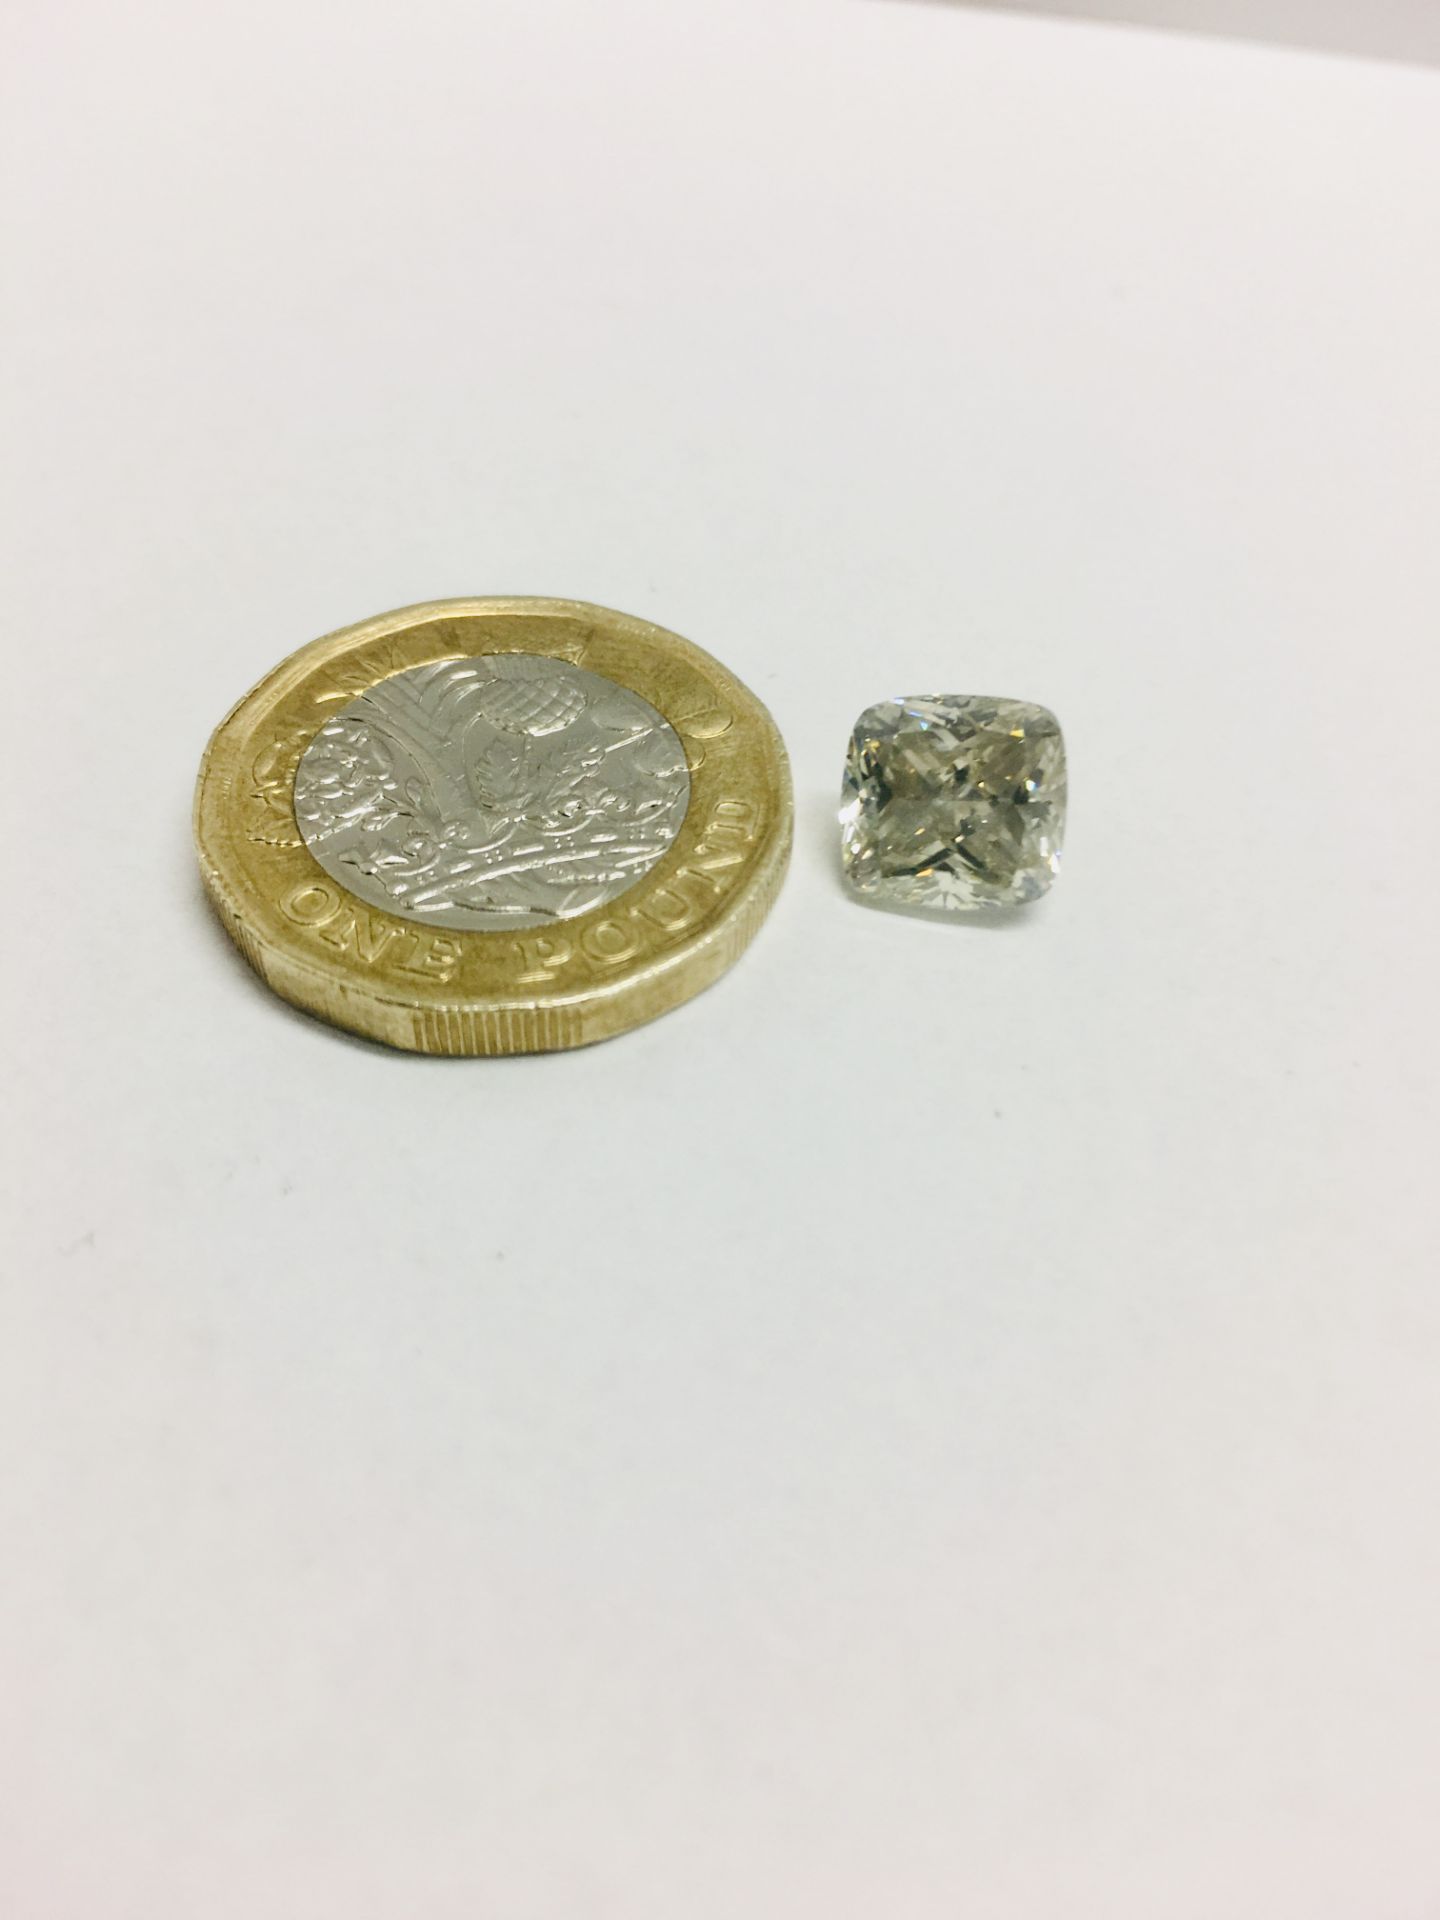 3.19ct Cushion shape diamond fancy grey colour si2 clarity,appraised at 15000